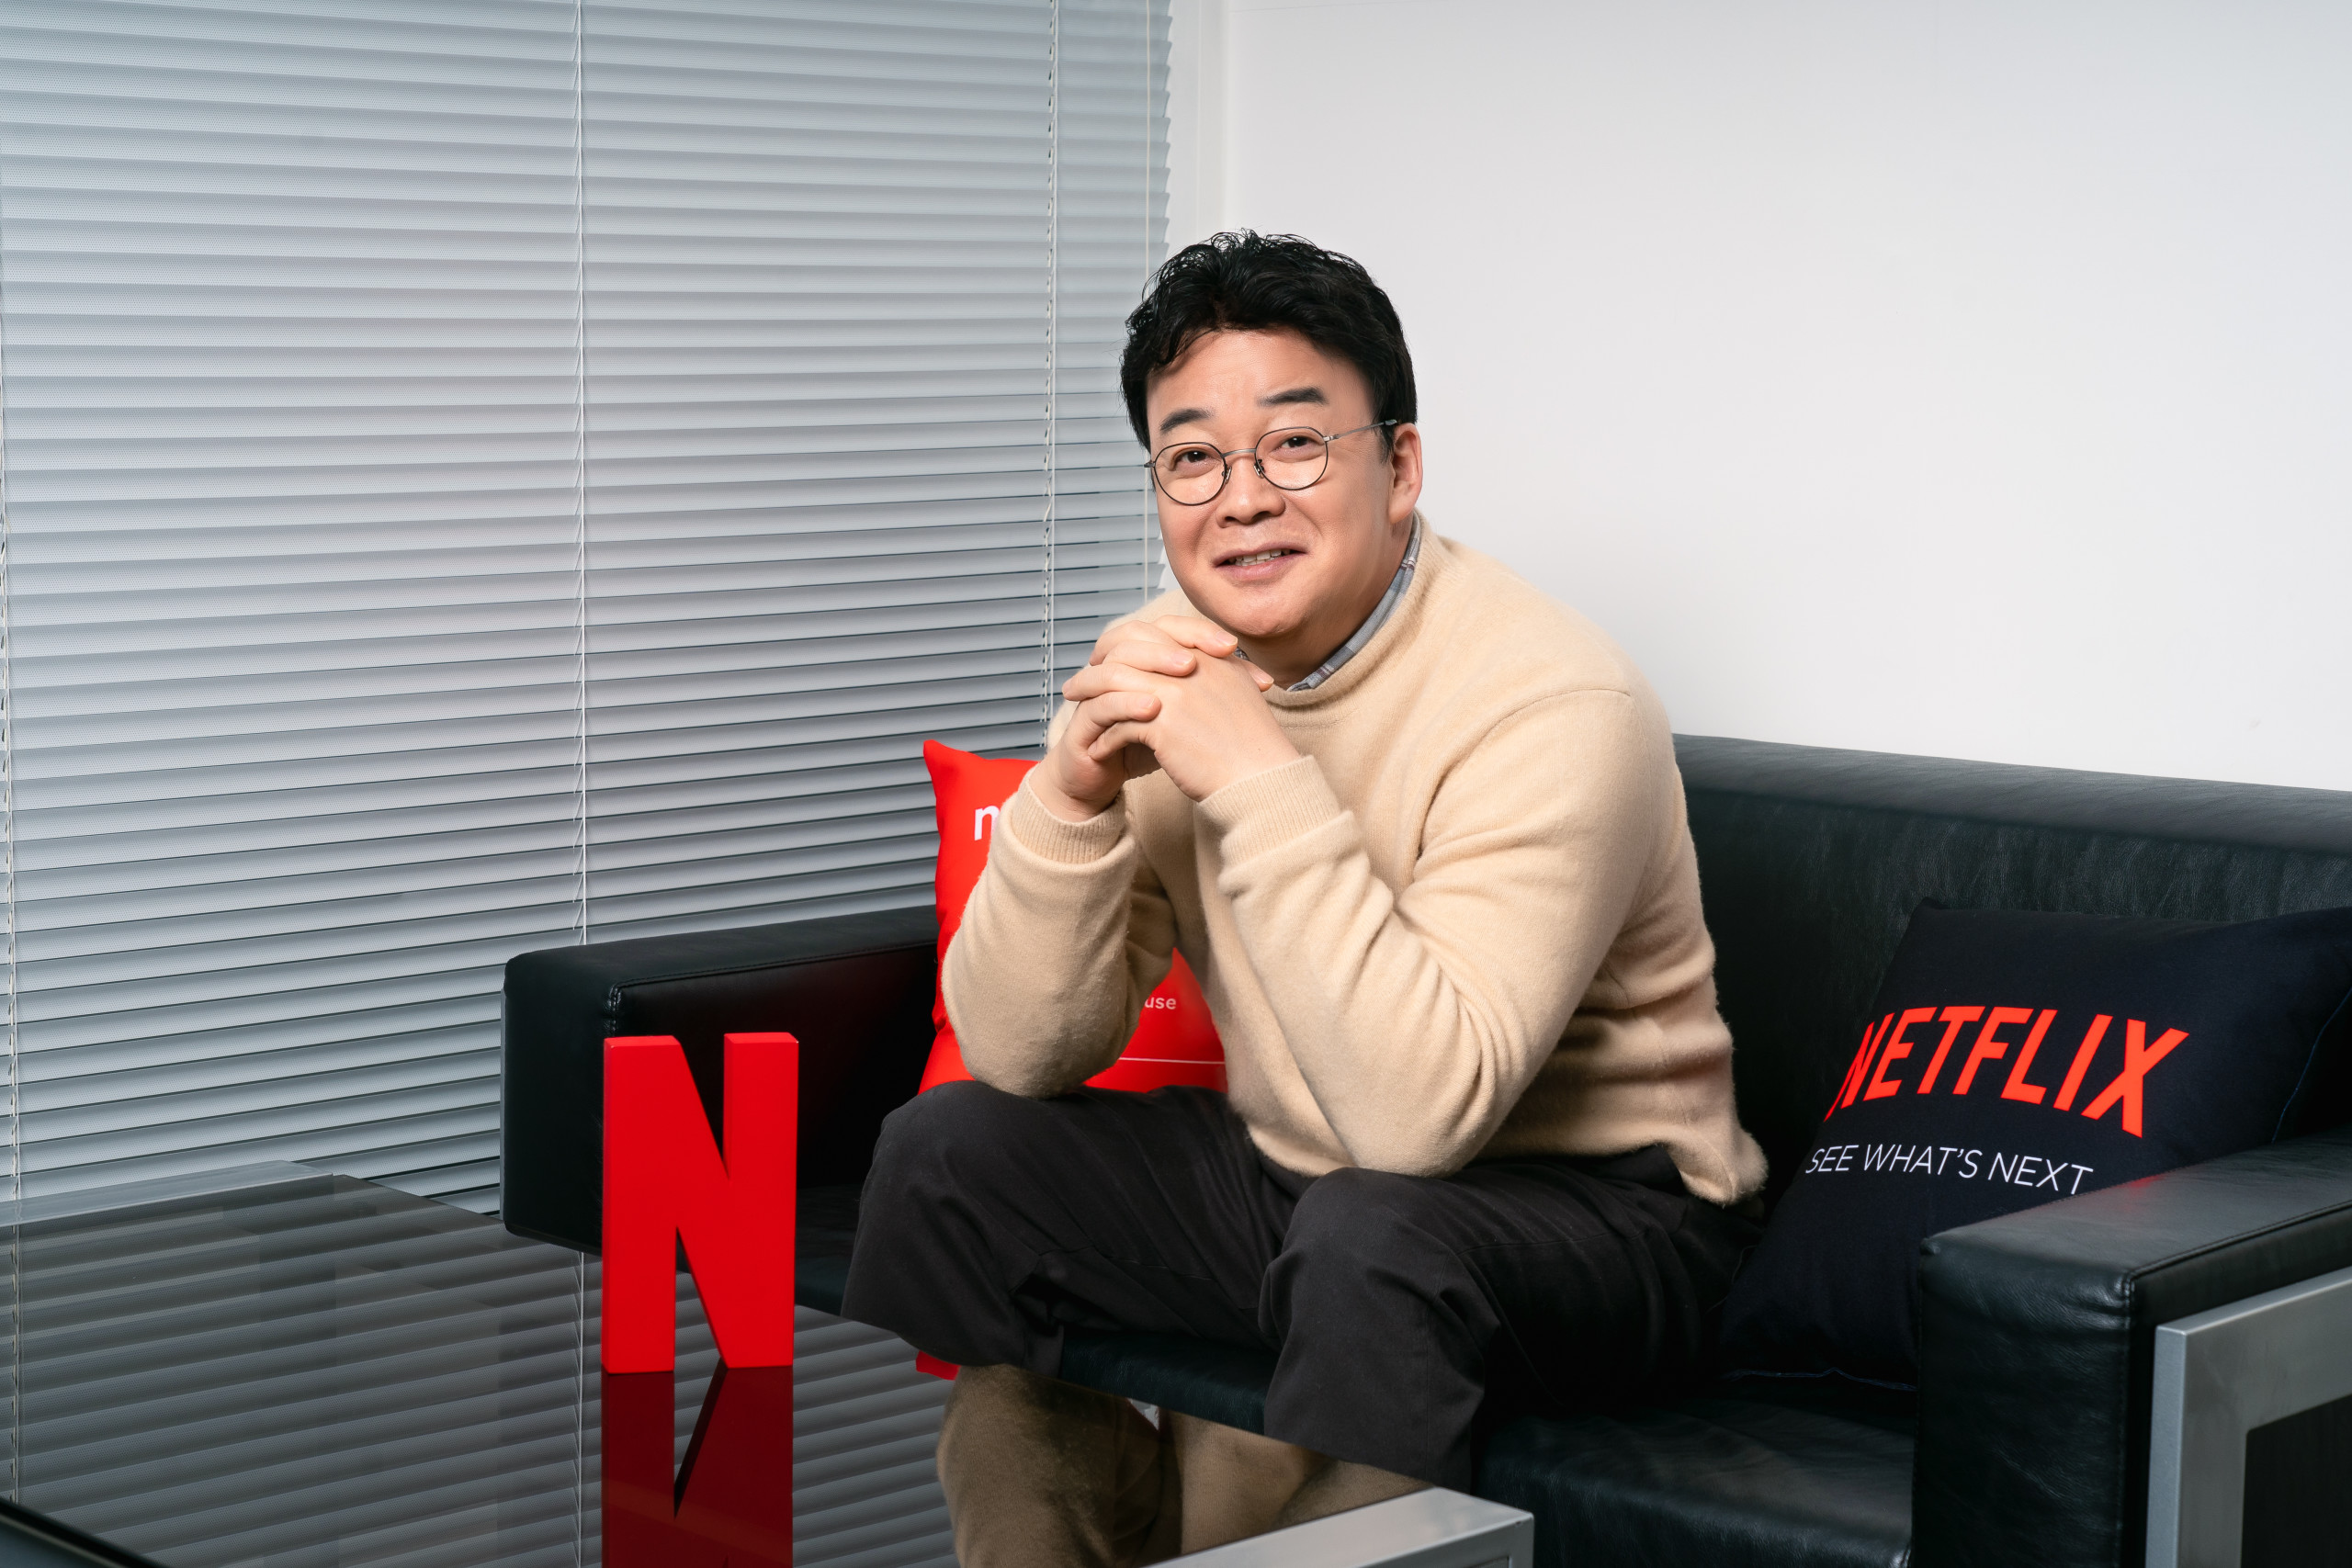 About Netflix Netflix 新たな韓国発のオリジナルシリーズ Paik S Spirit 英題 製作決定 レストラン経営者 兼飲食業界の起業家として有名なペク ジョンウォンとコラボ